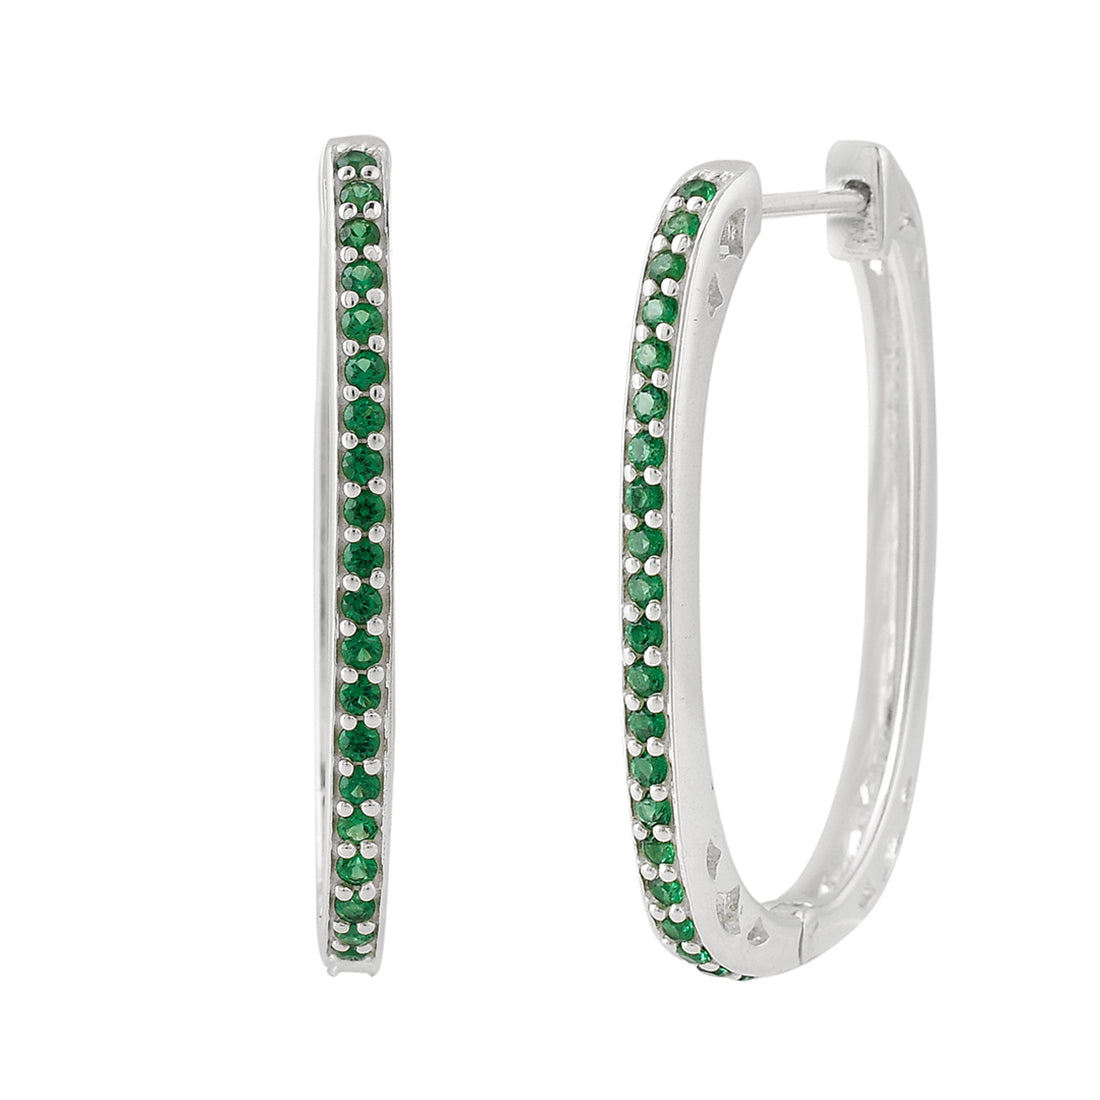 Women's Green Cz Stone Square Hoop Earring Set In 925 Sterling Silver - Voylla